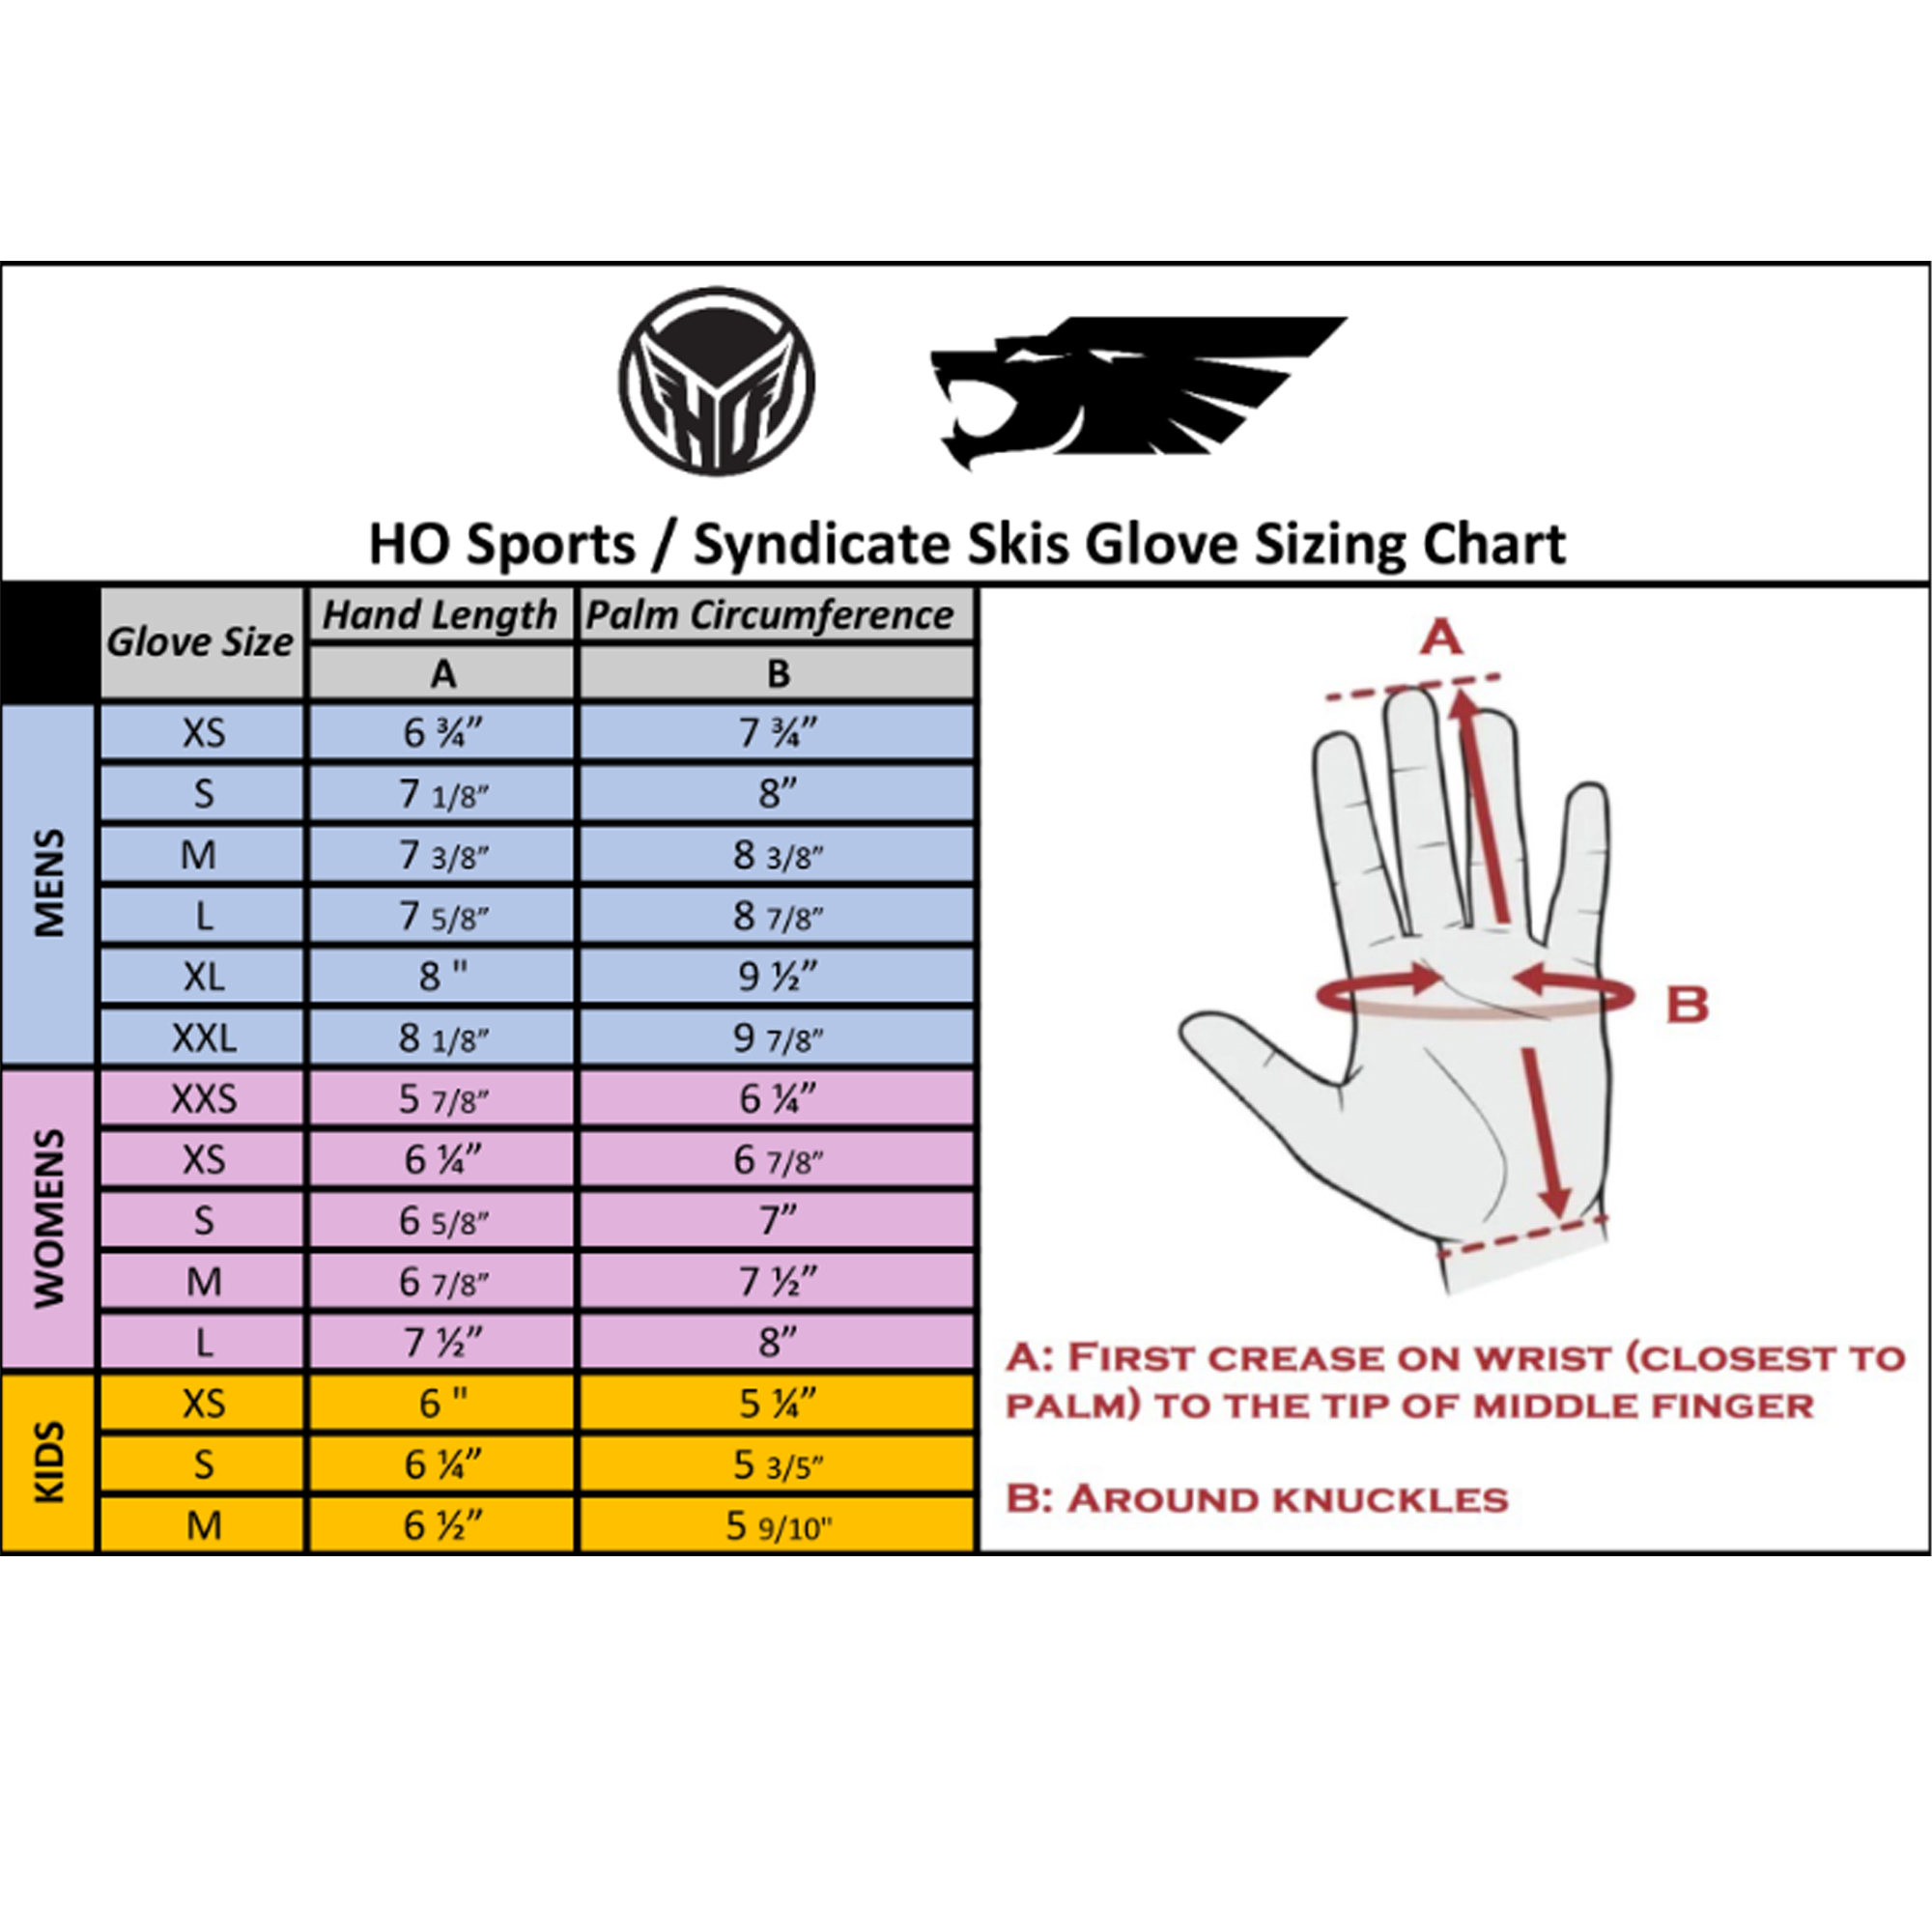 HO Sports Glove Chart (Image) 0 Grfico do tamanho